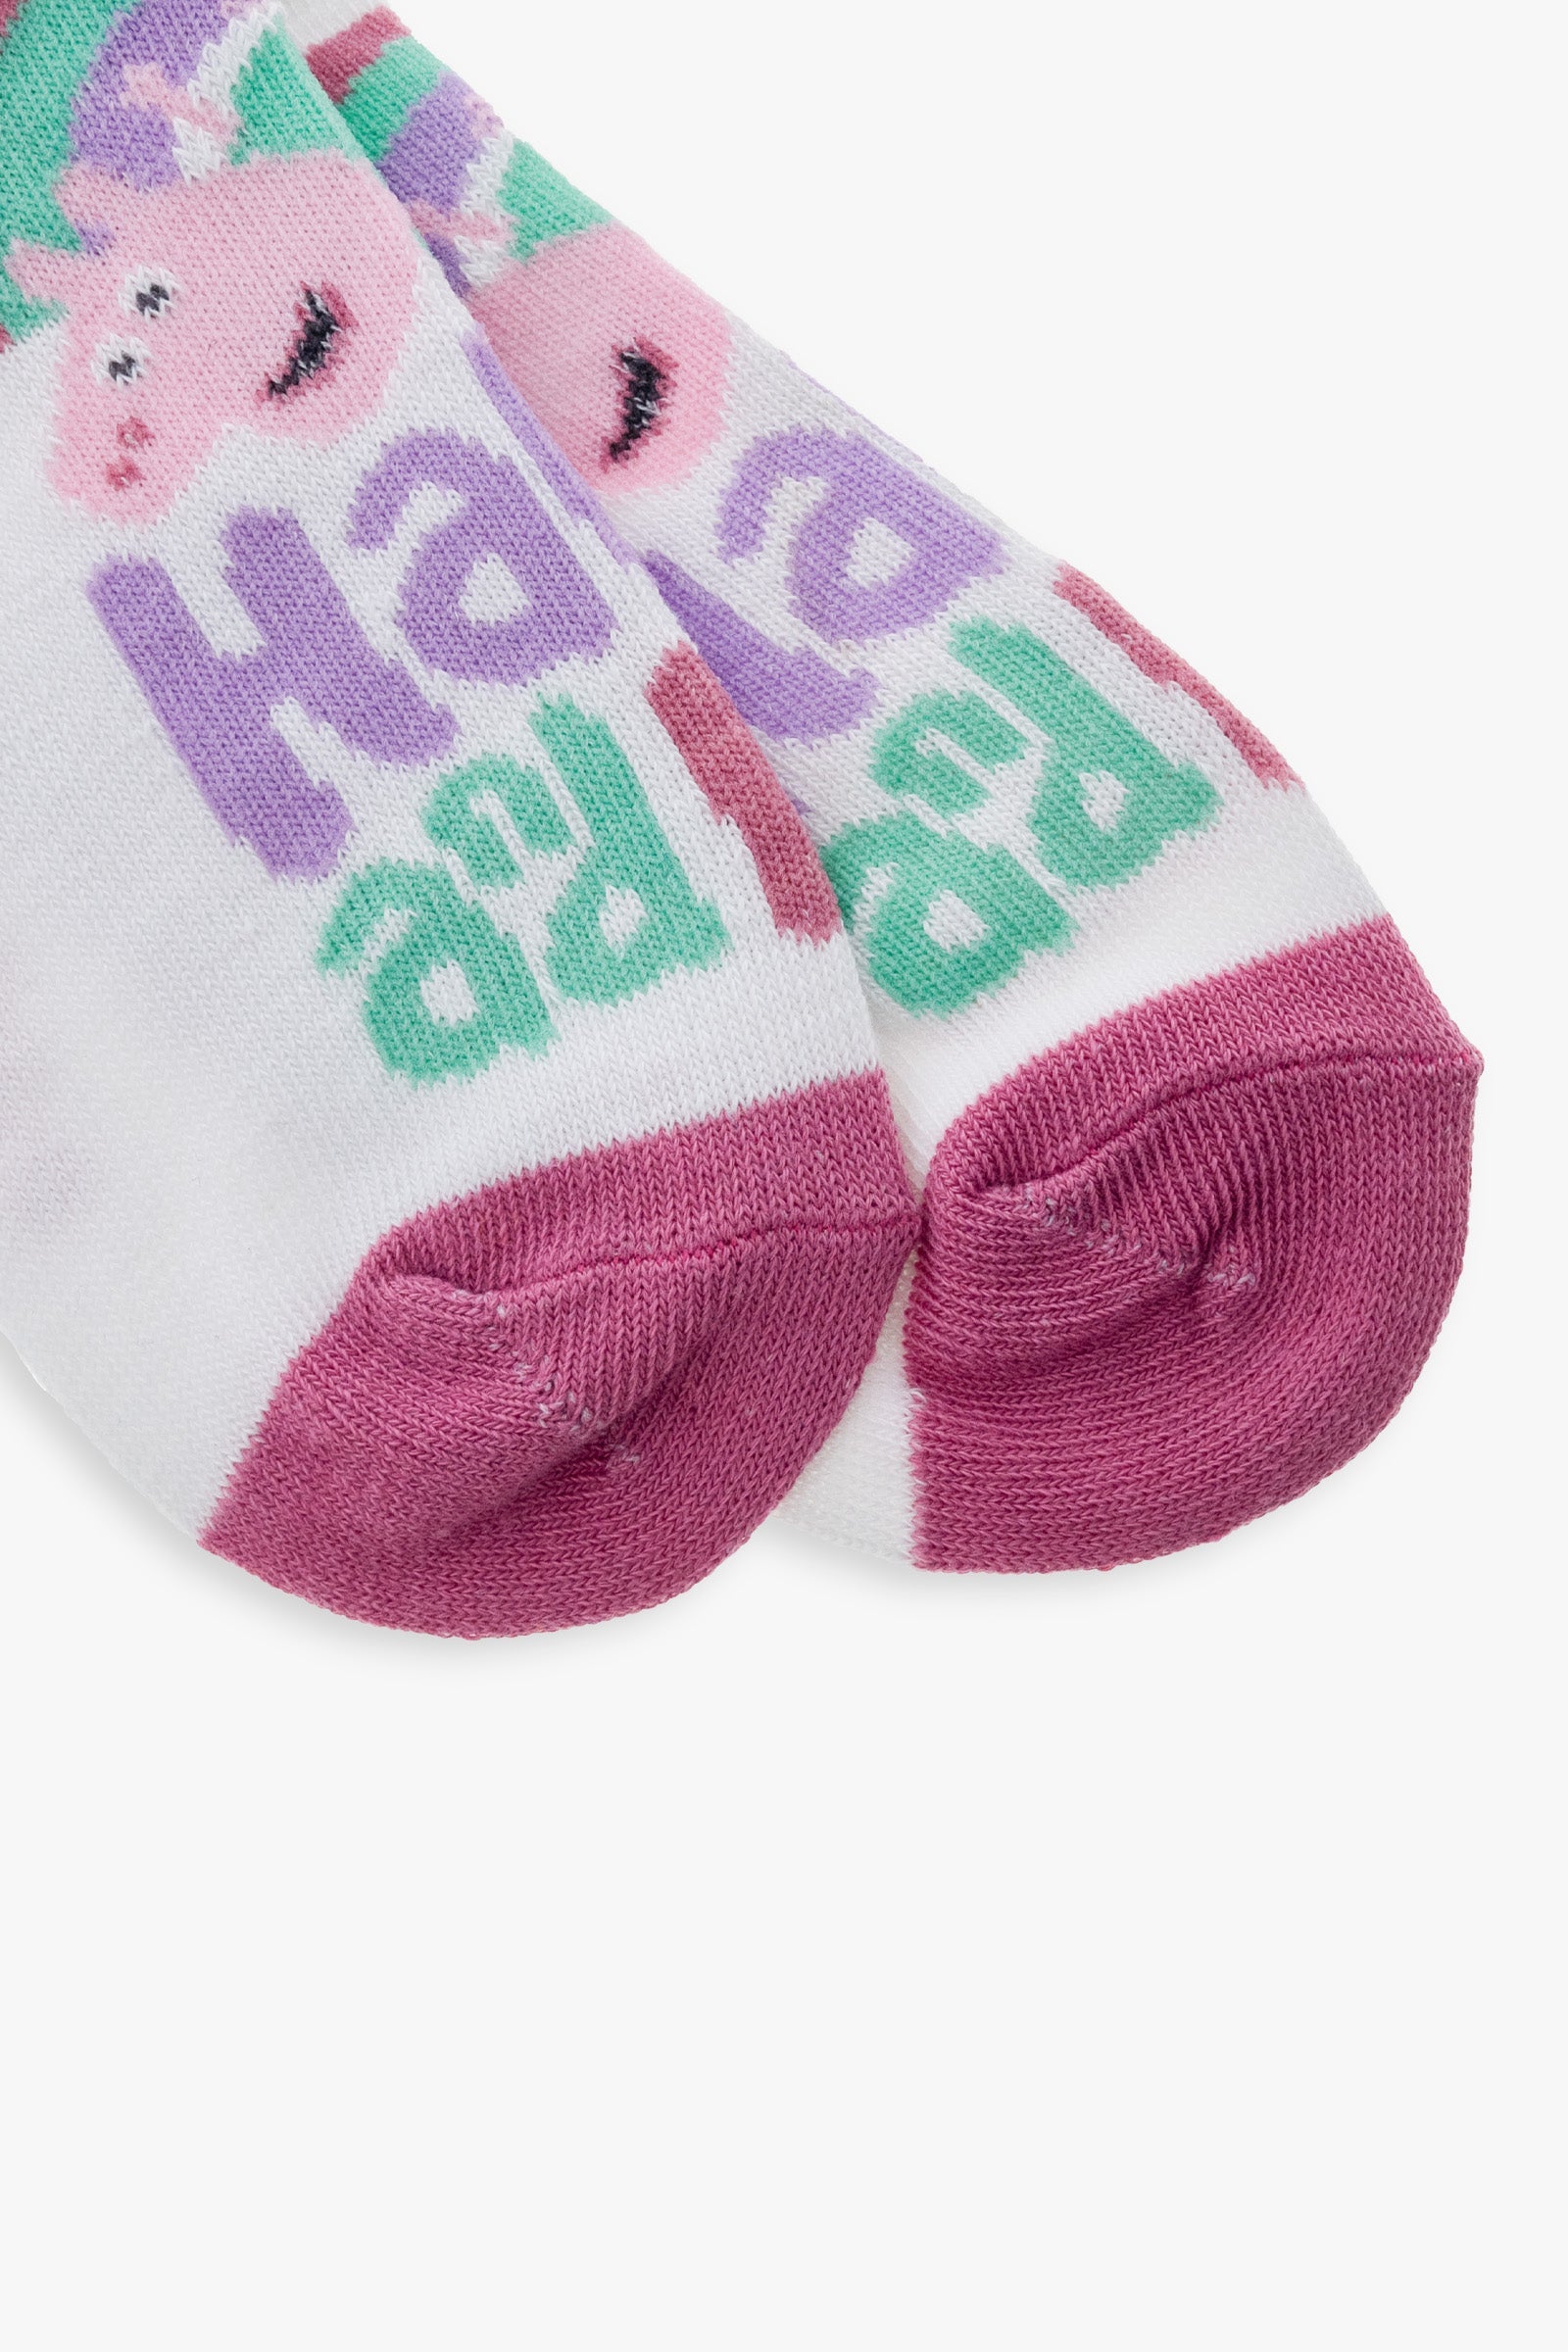 Peppa Pig Girls 3-Pack No-Show Ankle Socks